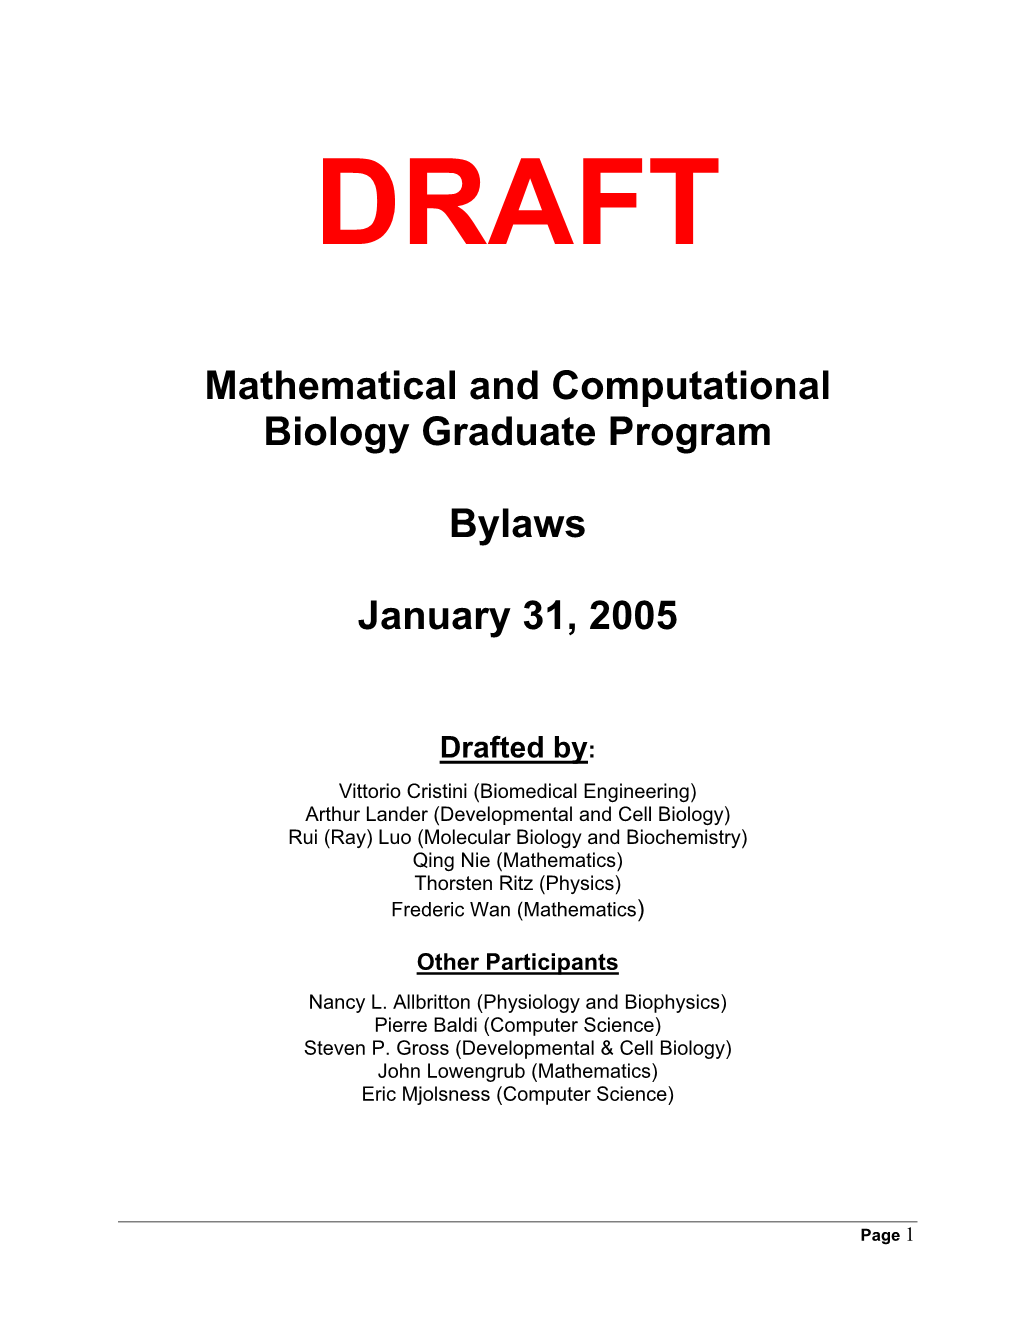 Mathematical and Computational Biology Graduate Program Bylaws